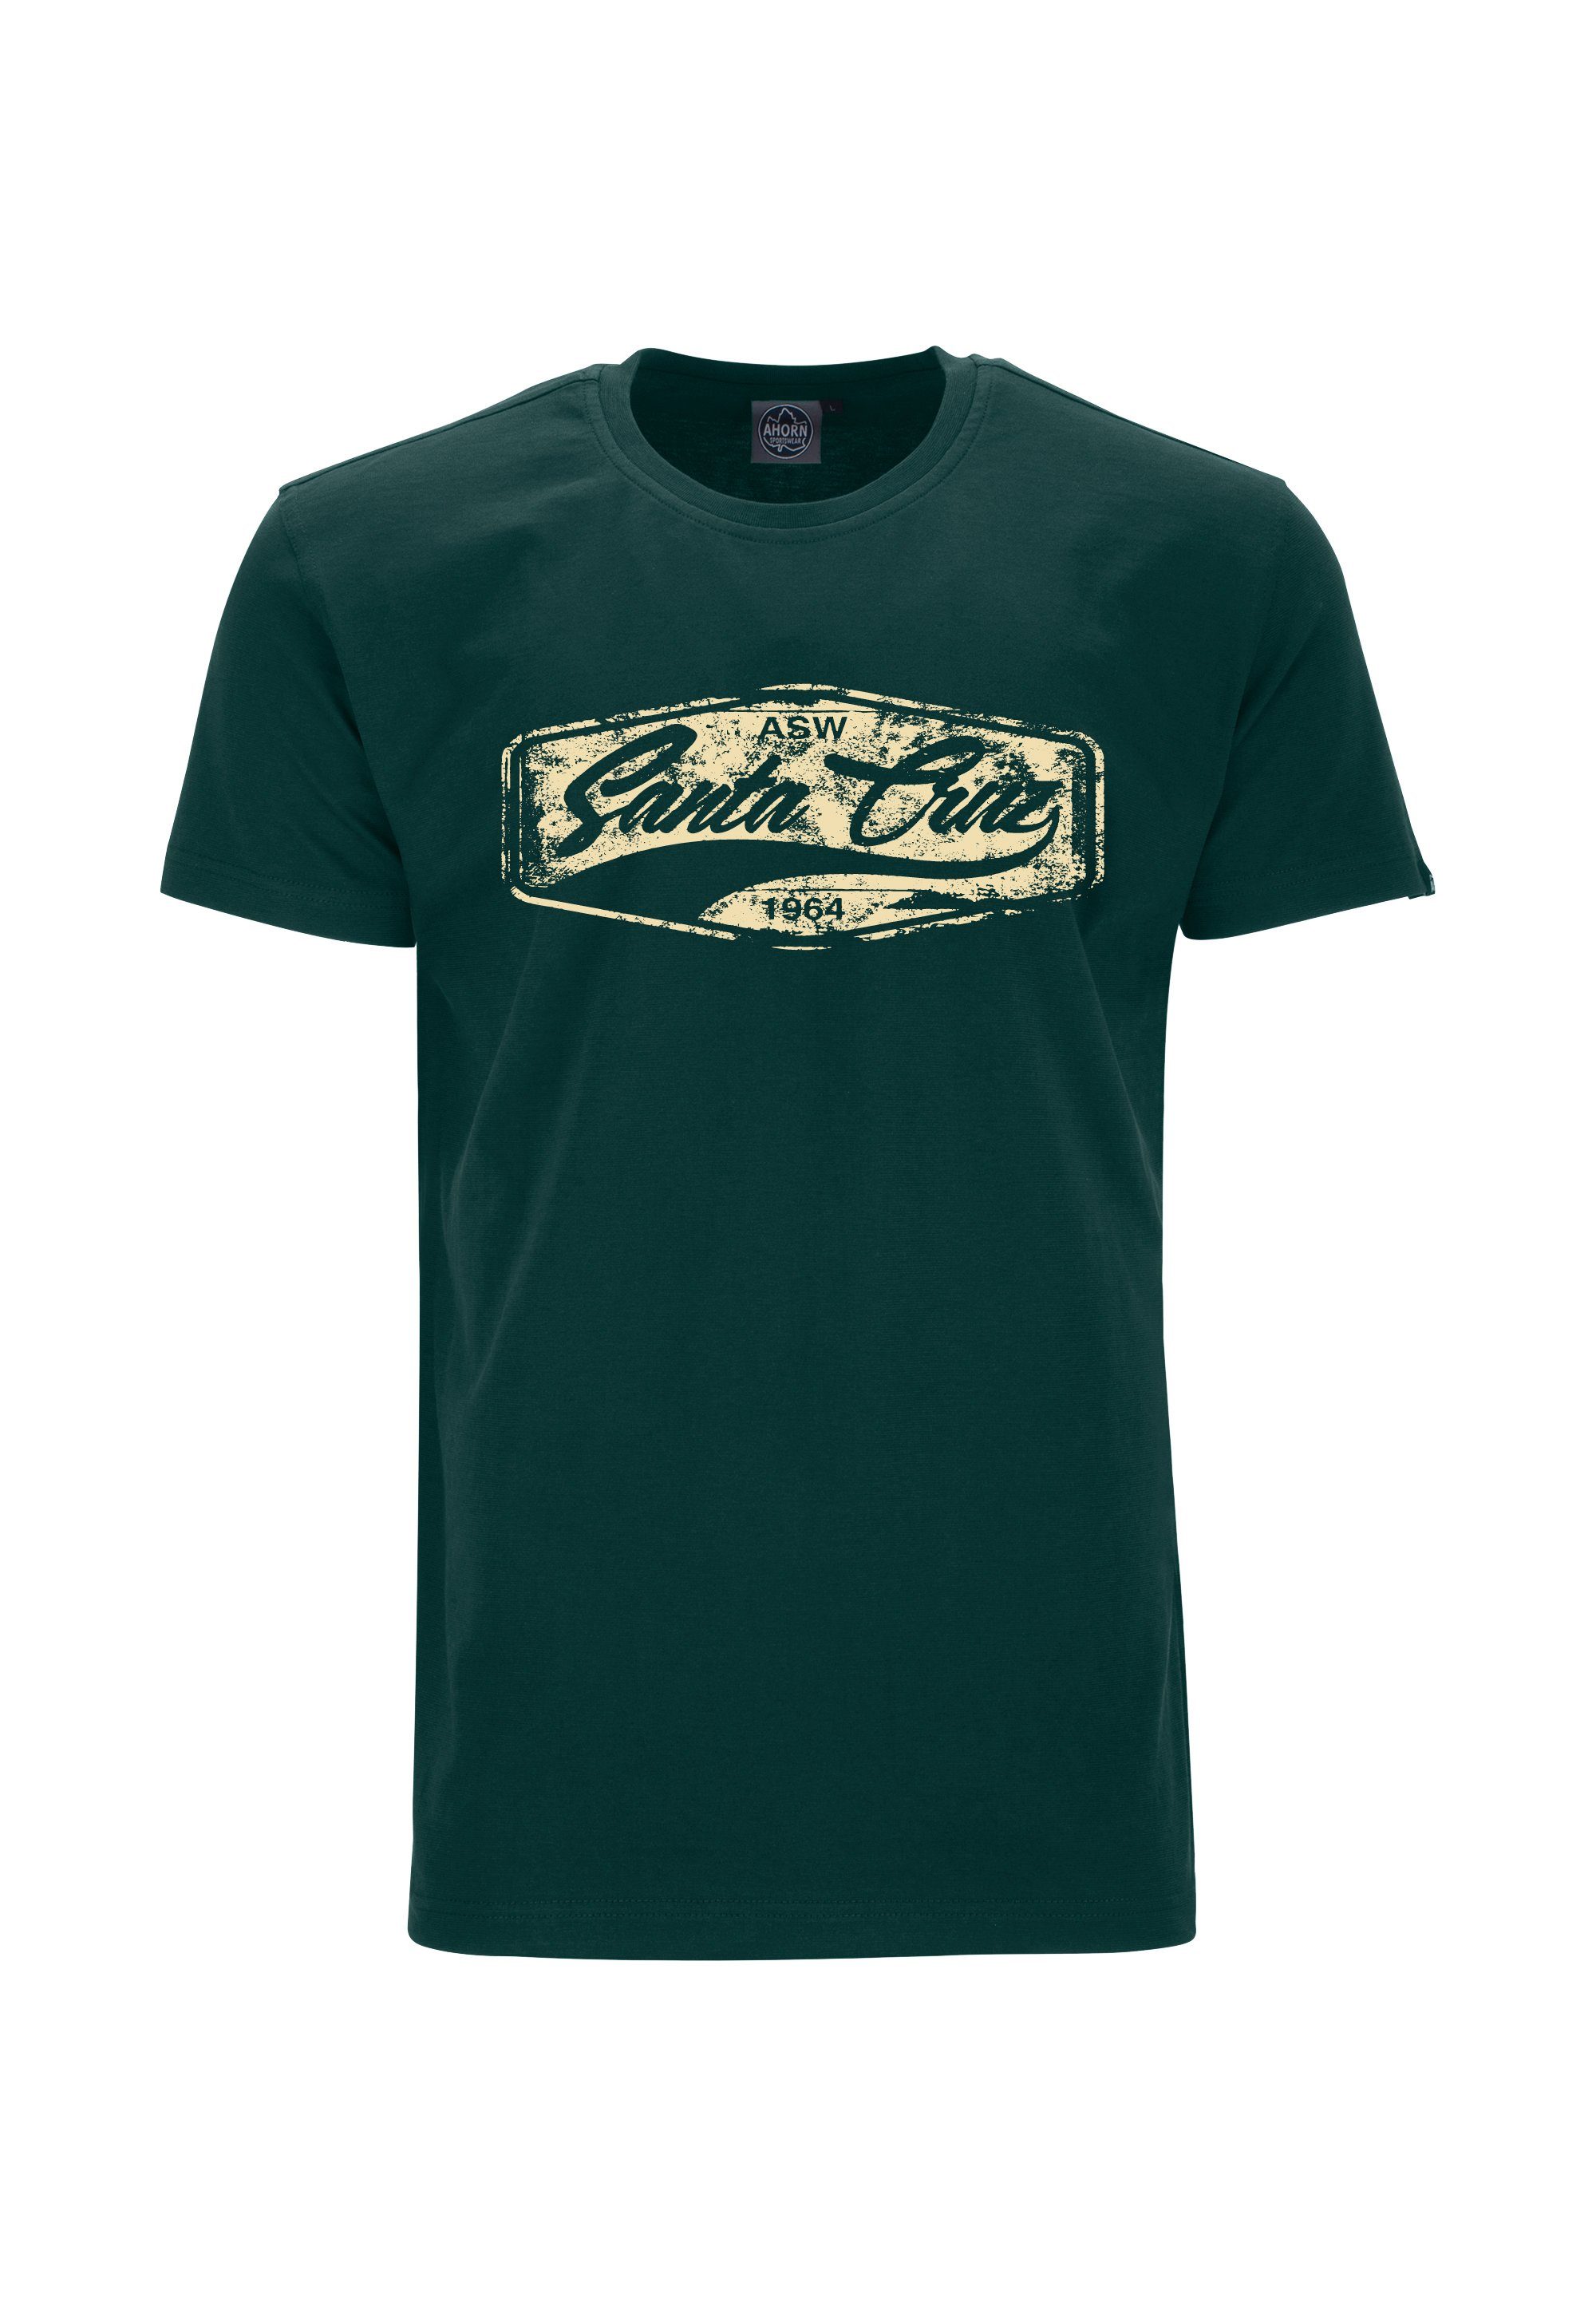 AHORN SPORTSWEAR T-Shirt SANTA CRU mit modischem Frontprint dunkelgrün | Sport-T-Shirts